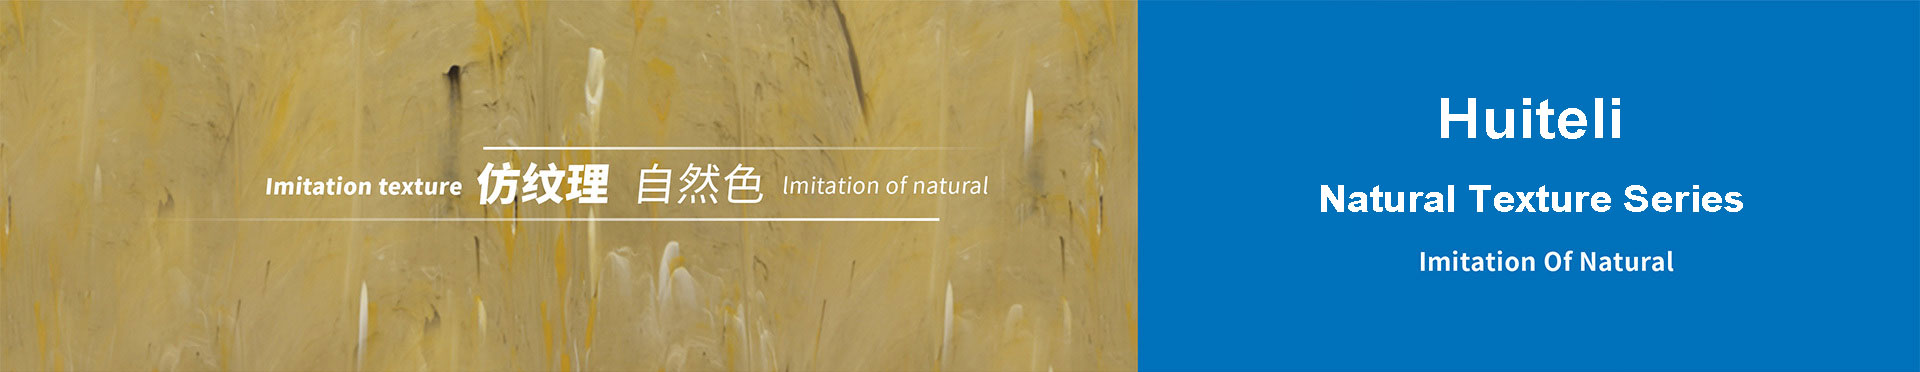 Natural-Texture-Series-banner1-